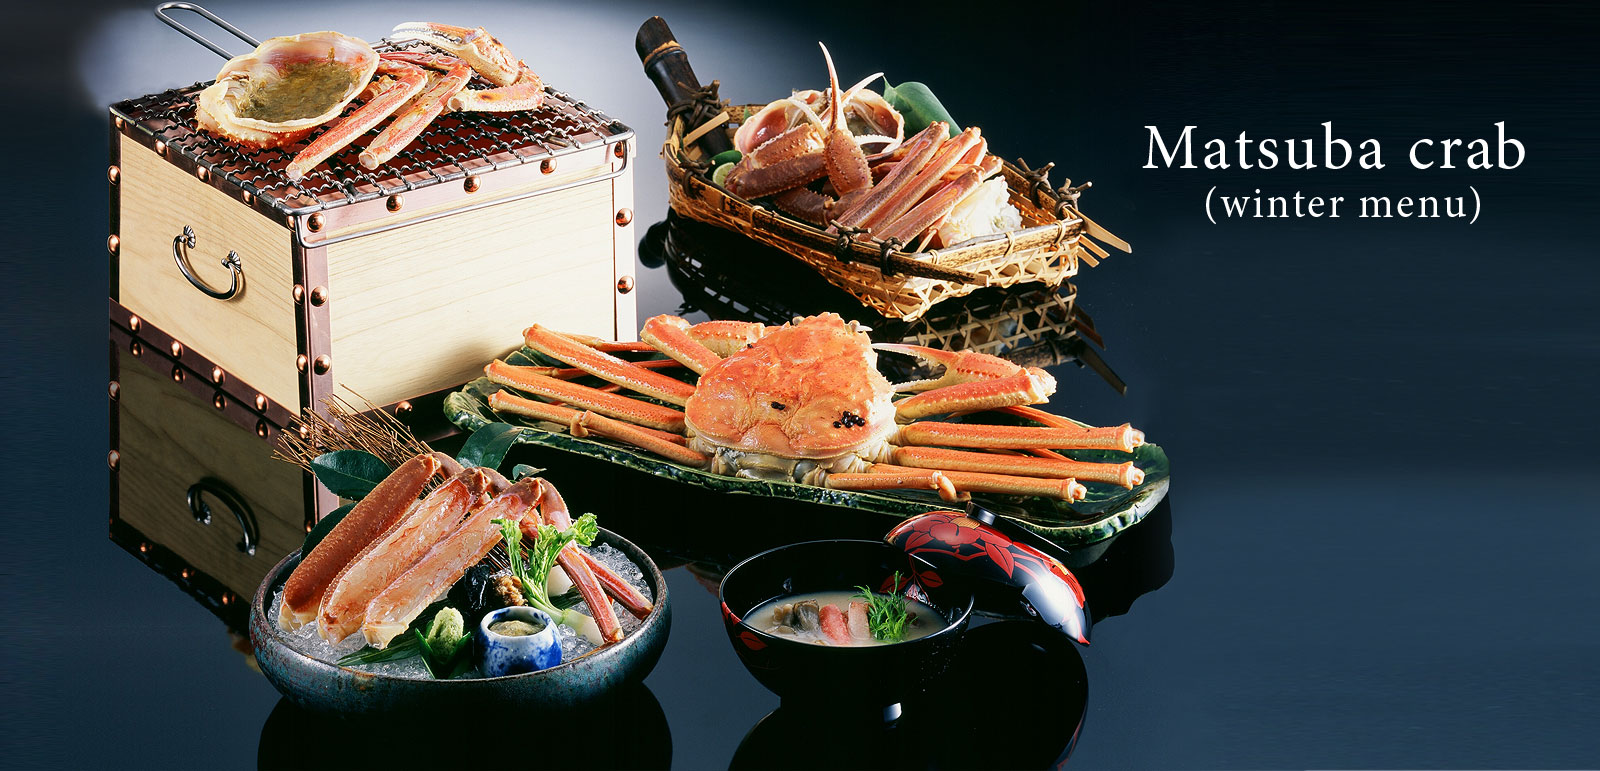 Matsuba crab (winter menu)